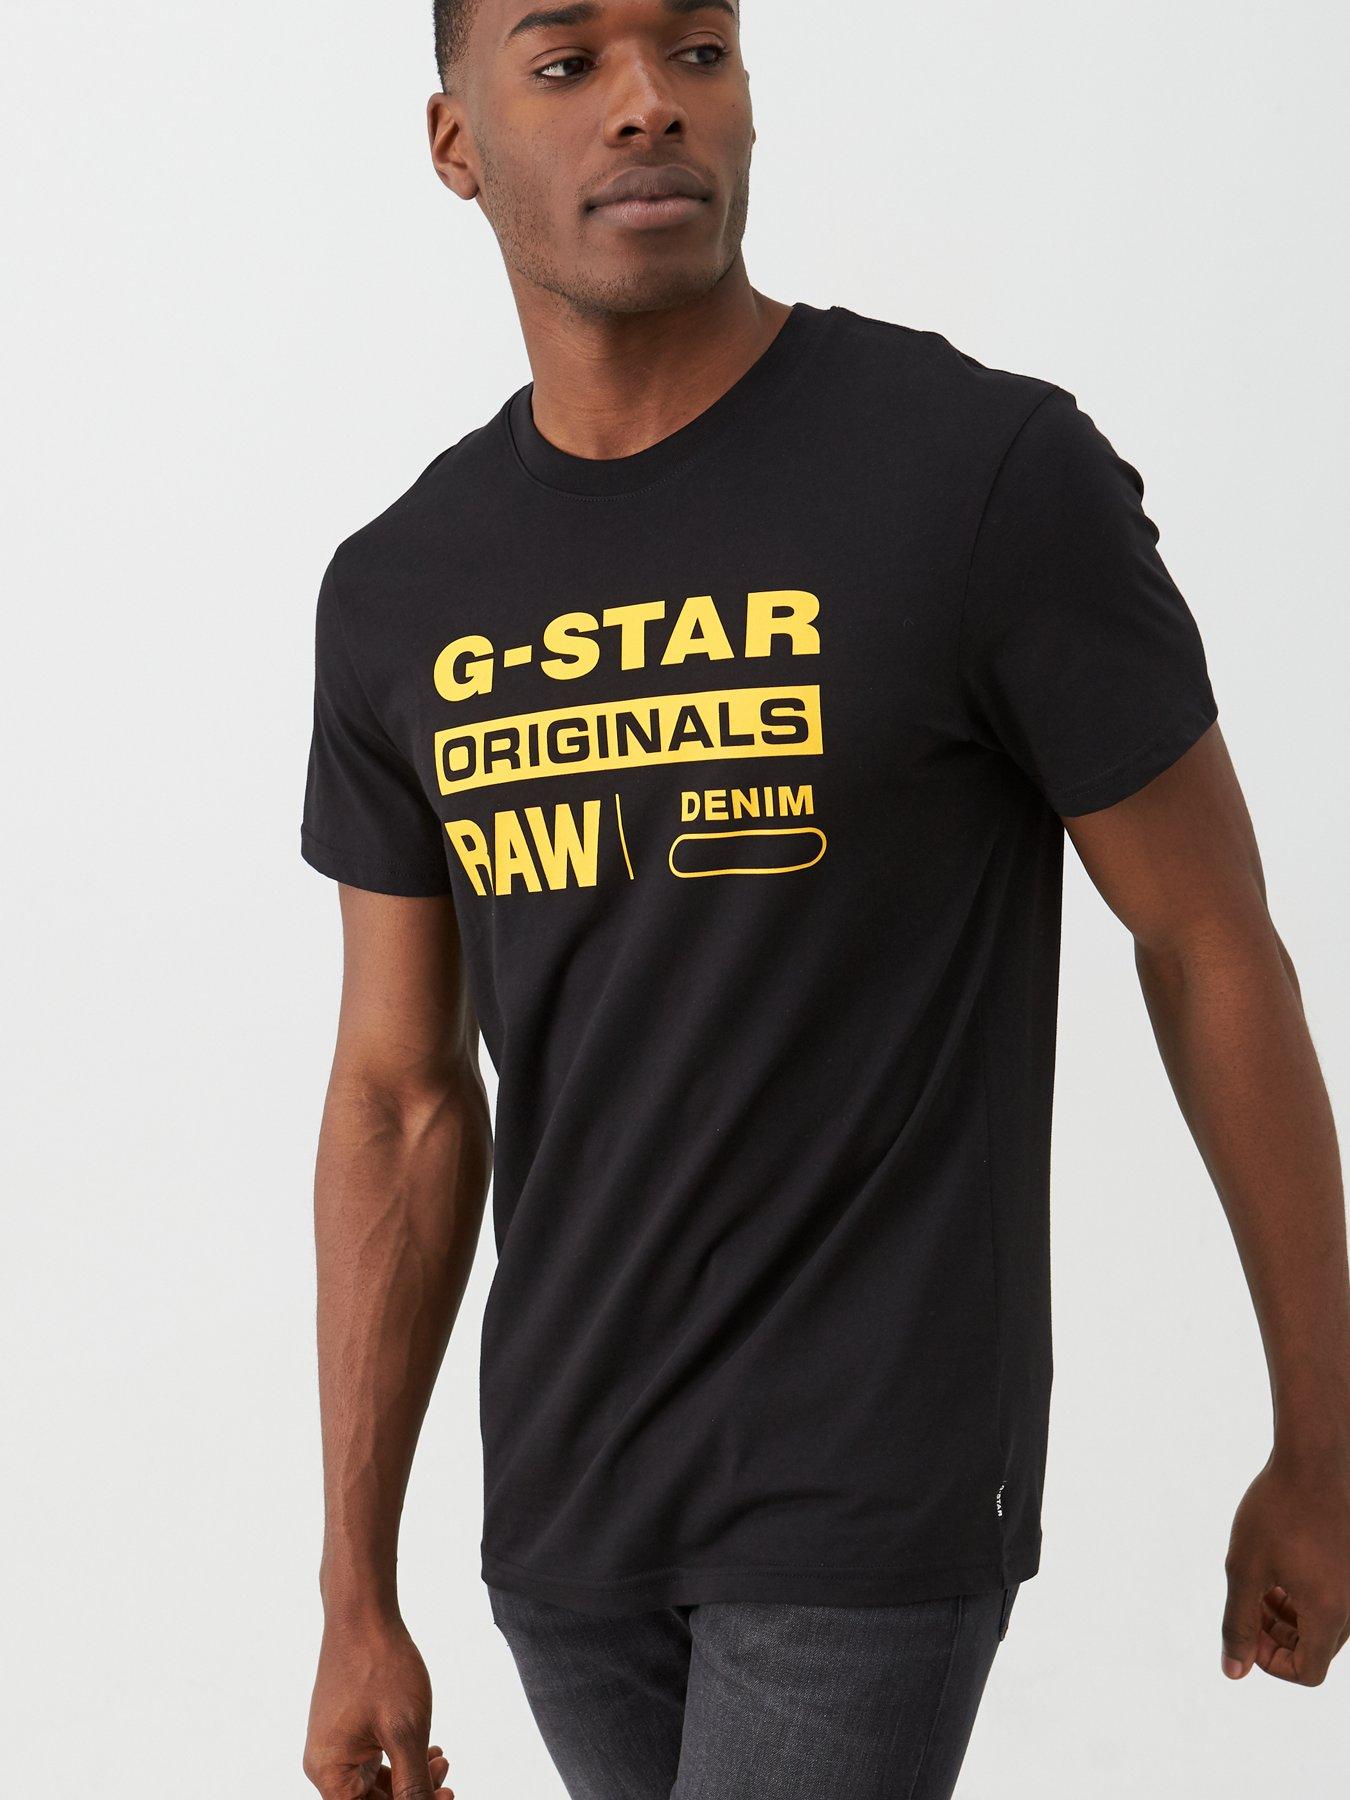 g star shirts